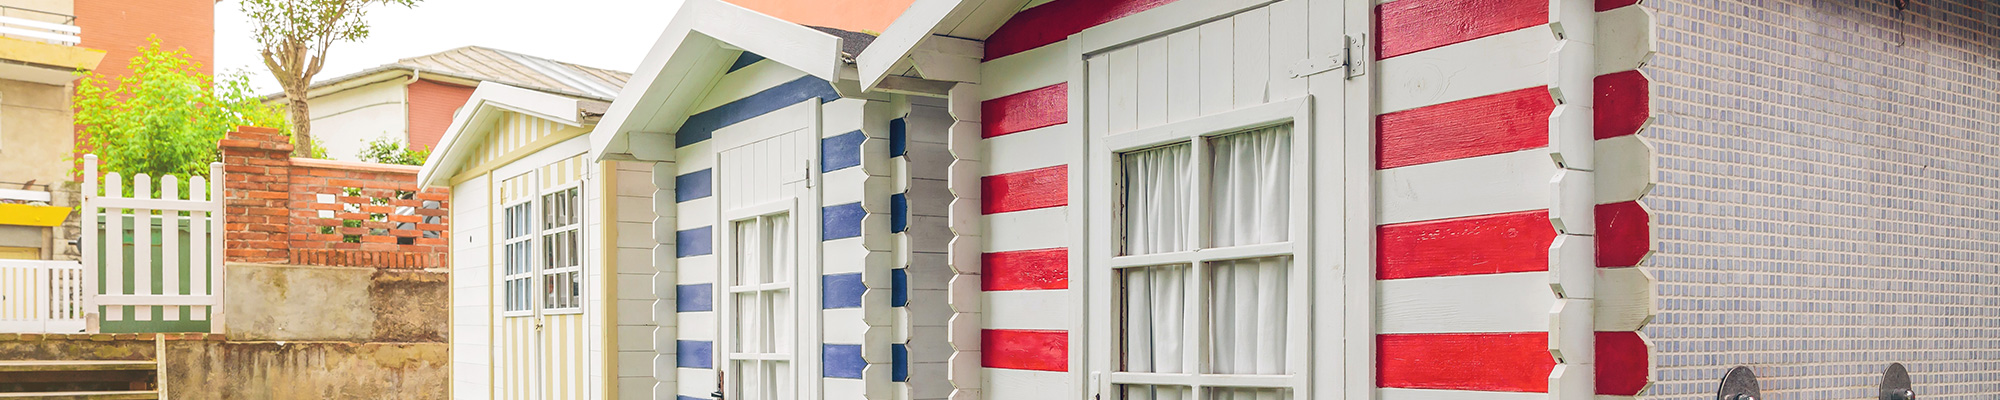 row or striped coloured posh sheds